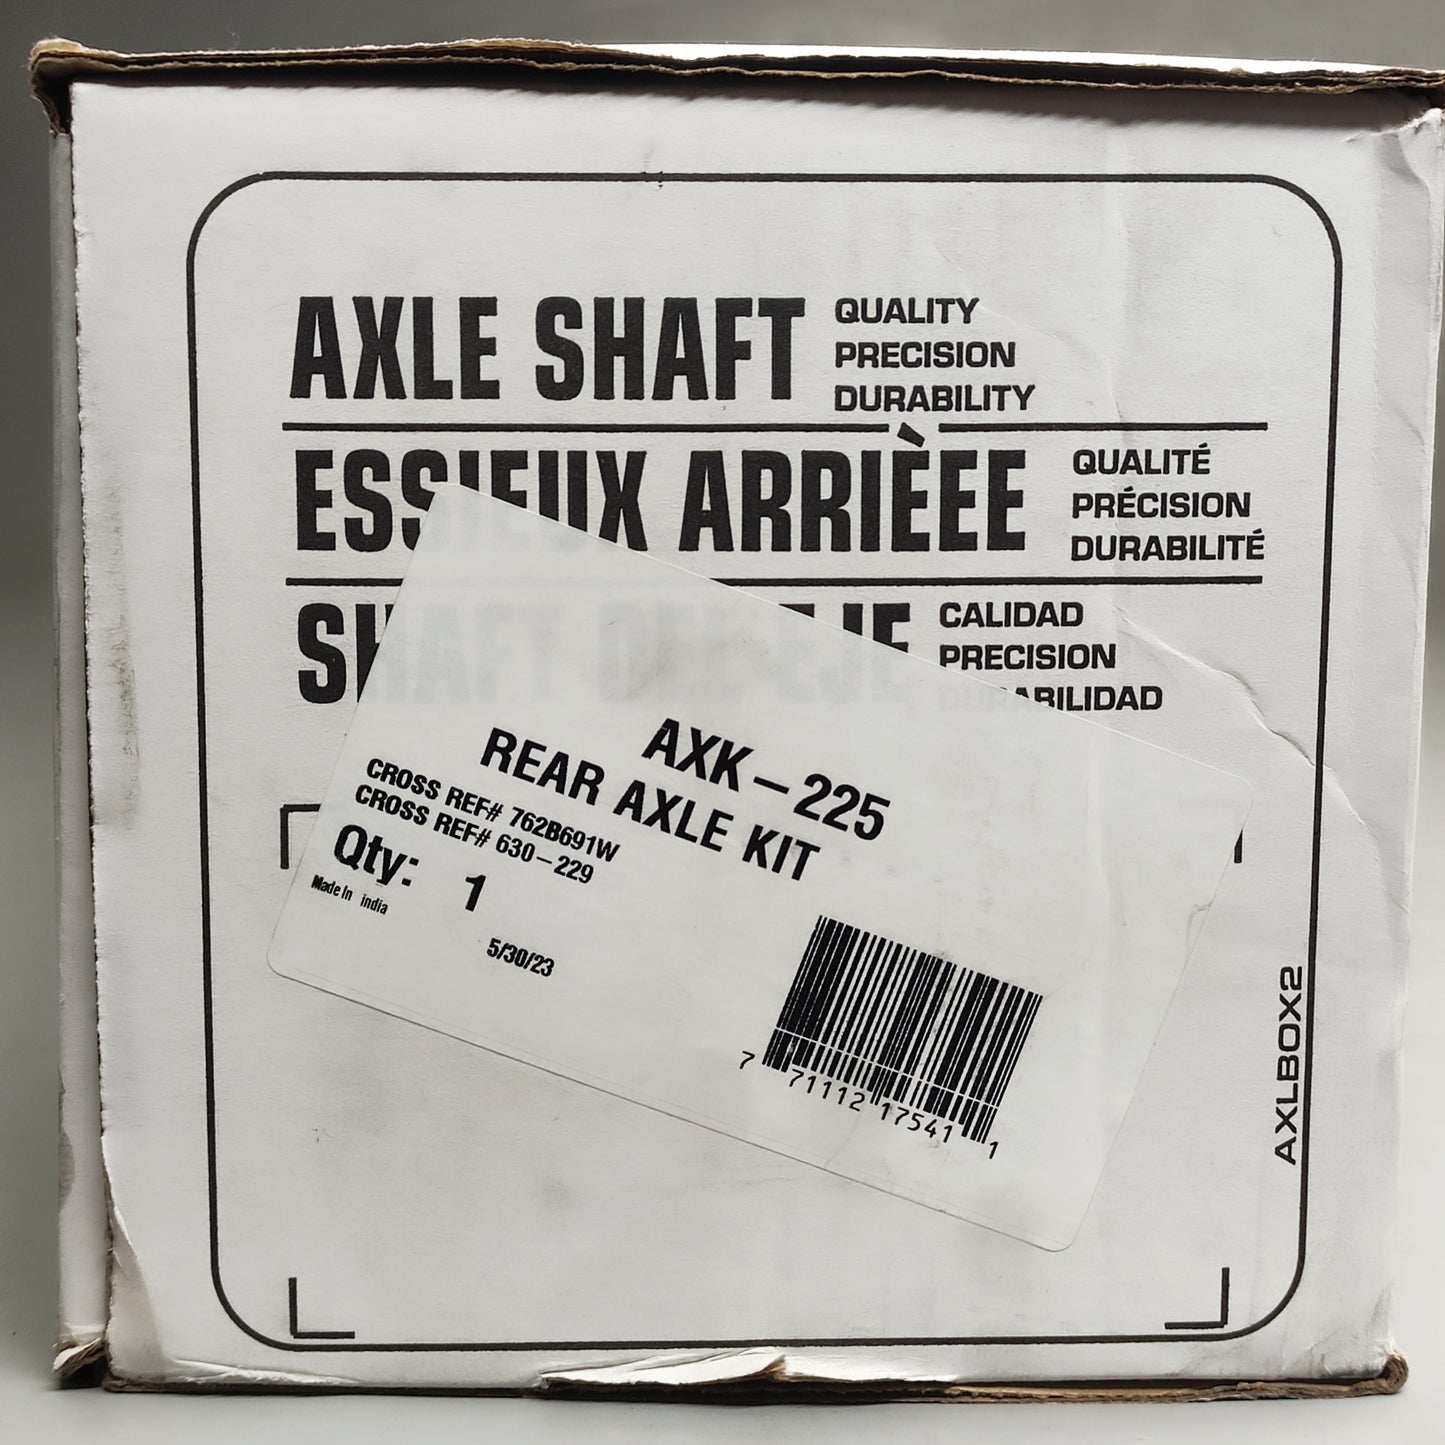 POWER TORQUE Axle Shaft Rear Axle Kit for FORD, MERCURY AXK-225 (Ref 762B691W, 630-229)